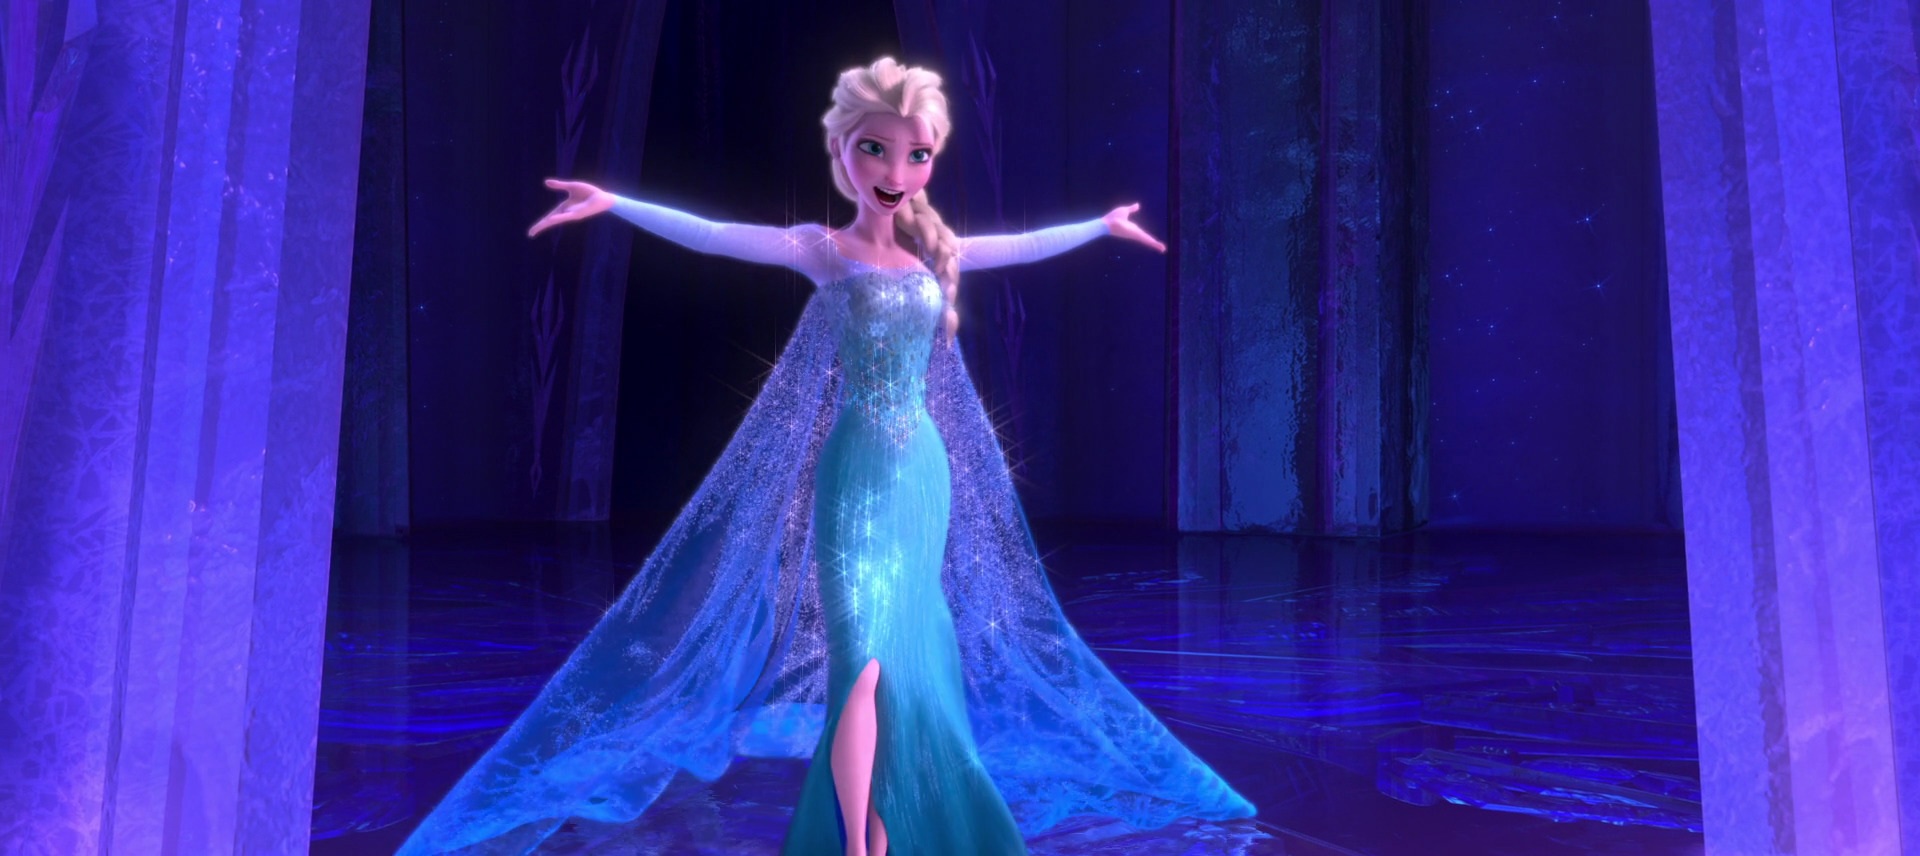 KAWELL Frozen Elsa Dress Up Costume With Cosplay India | Ubuy